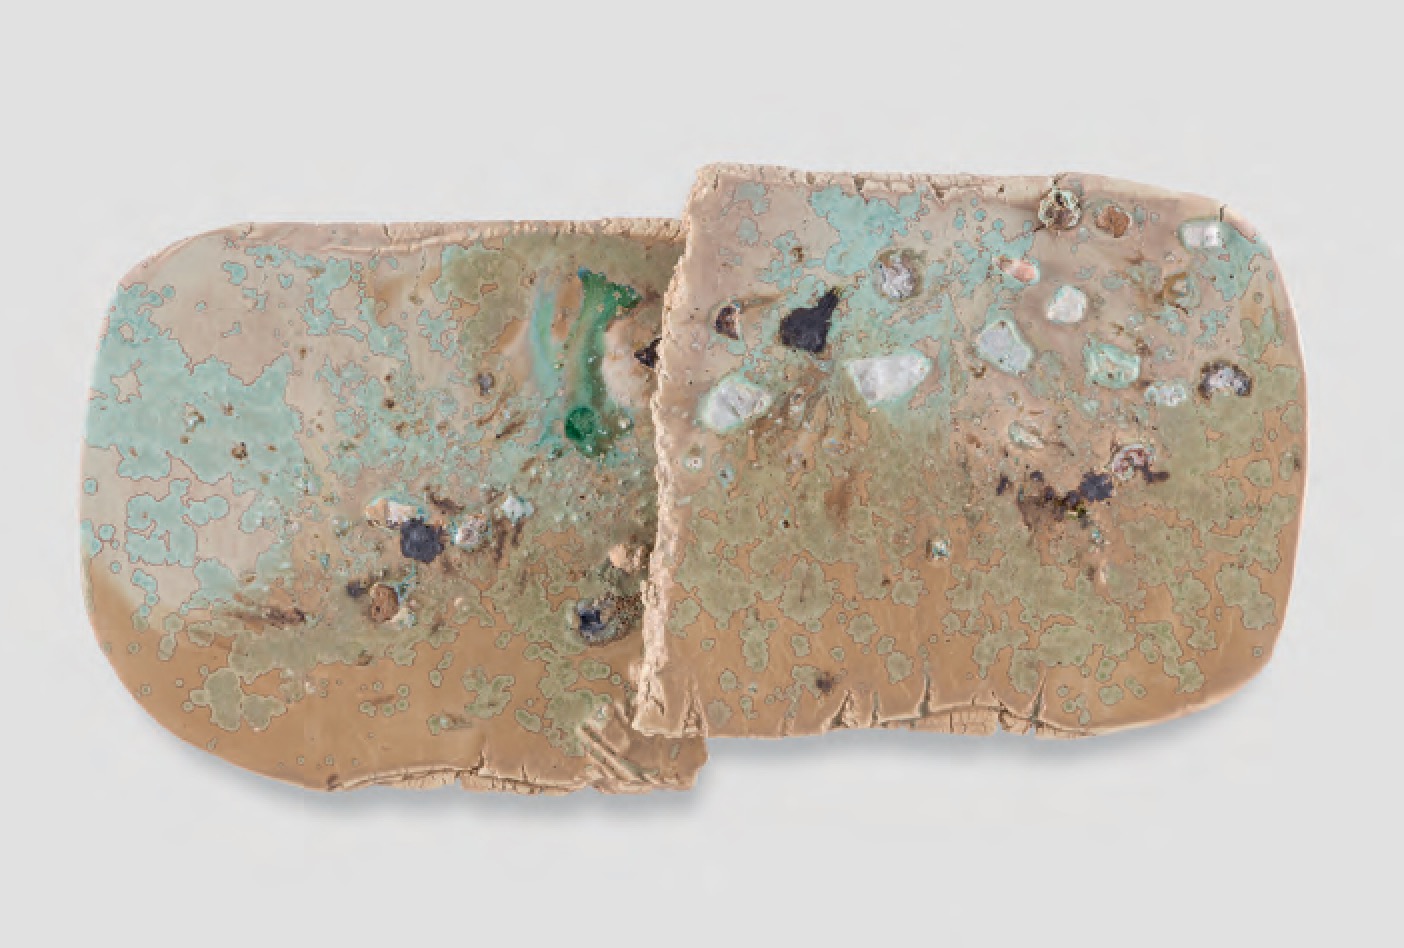 calefaction subduction, 2015 Ceramic, glaze, stones, minerals - Liz Larner